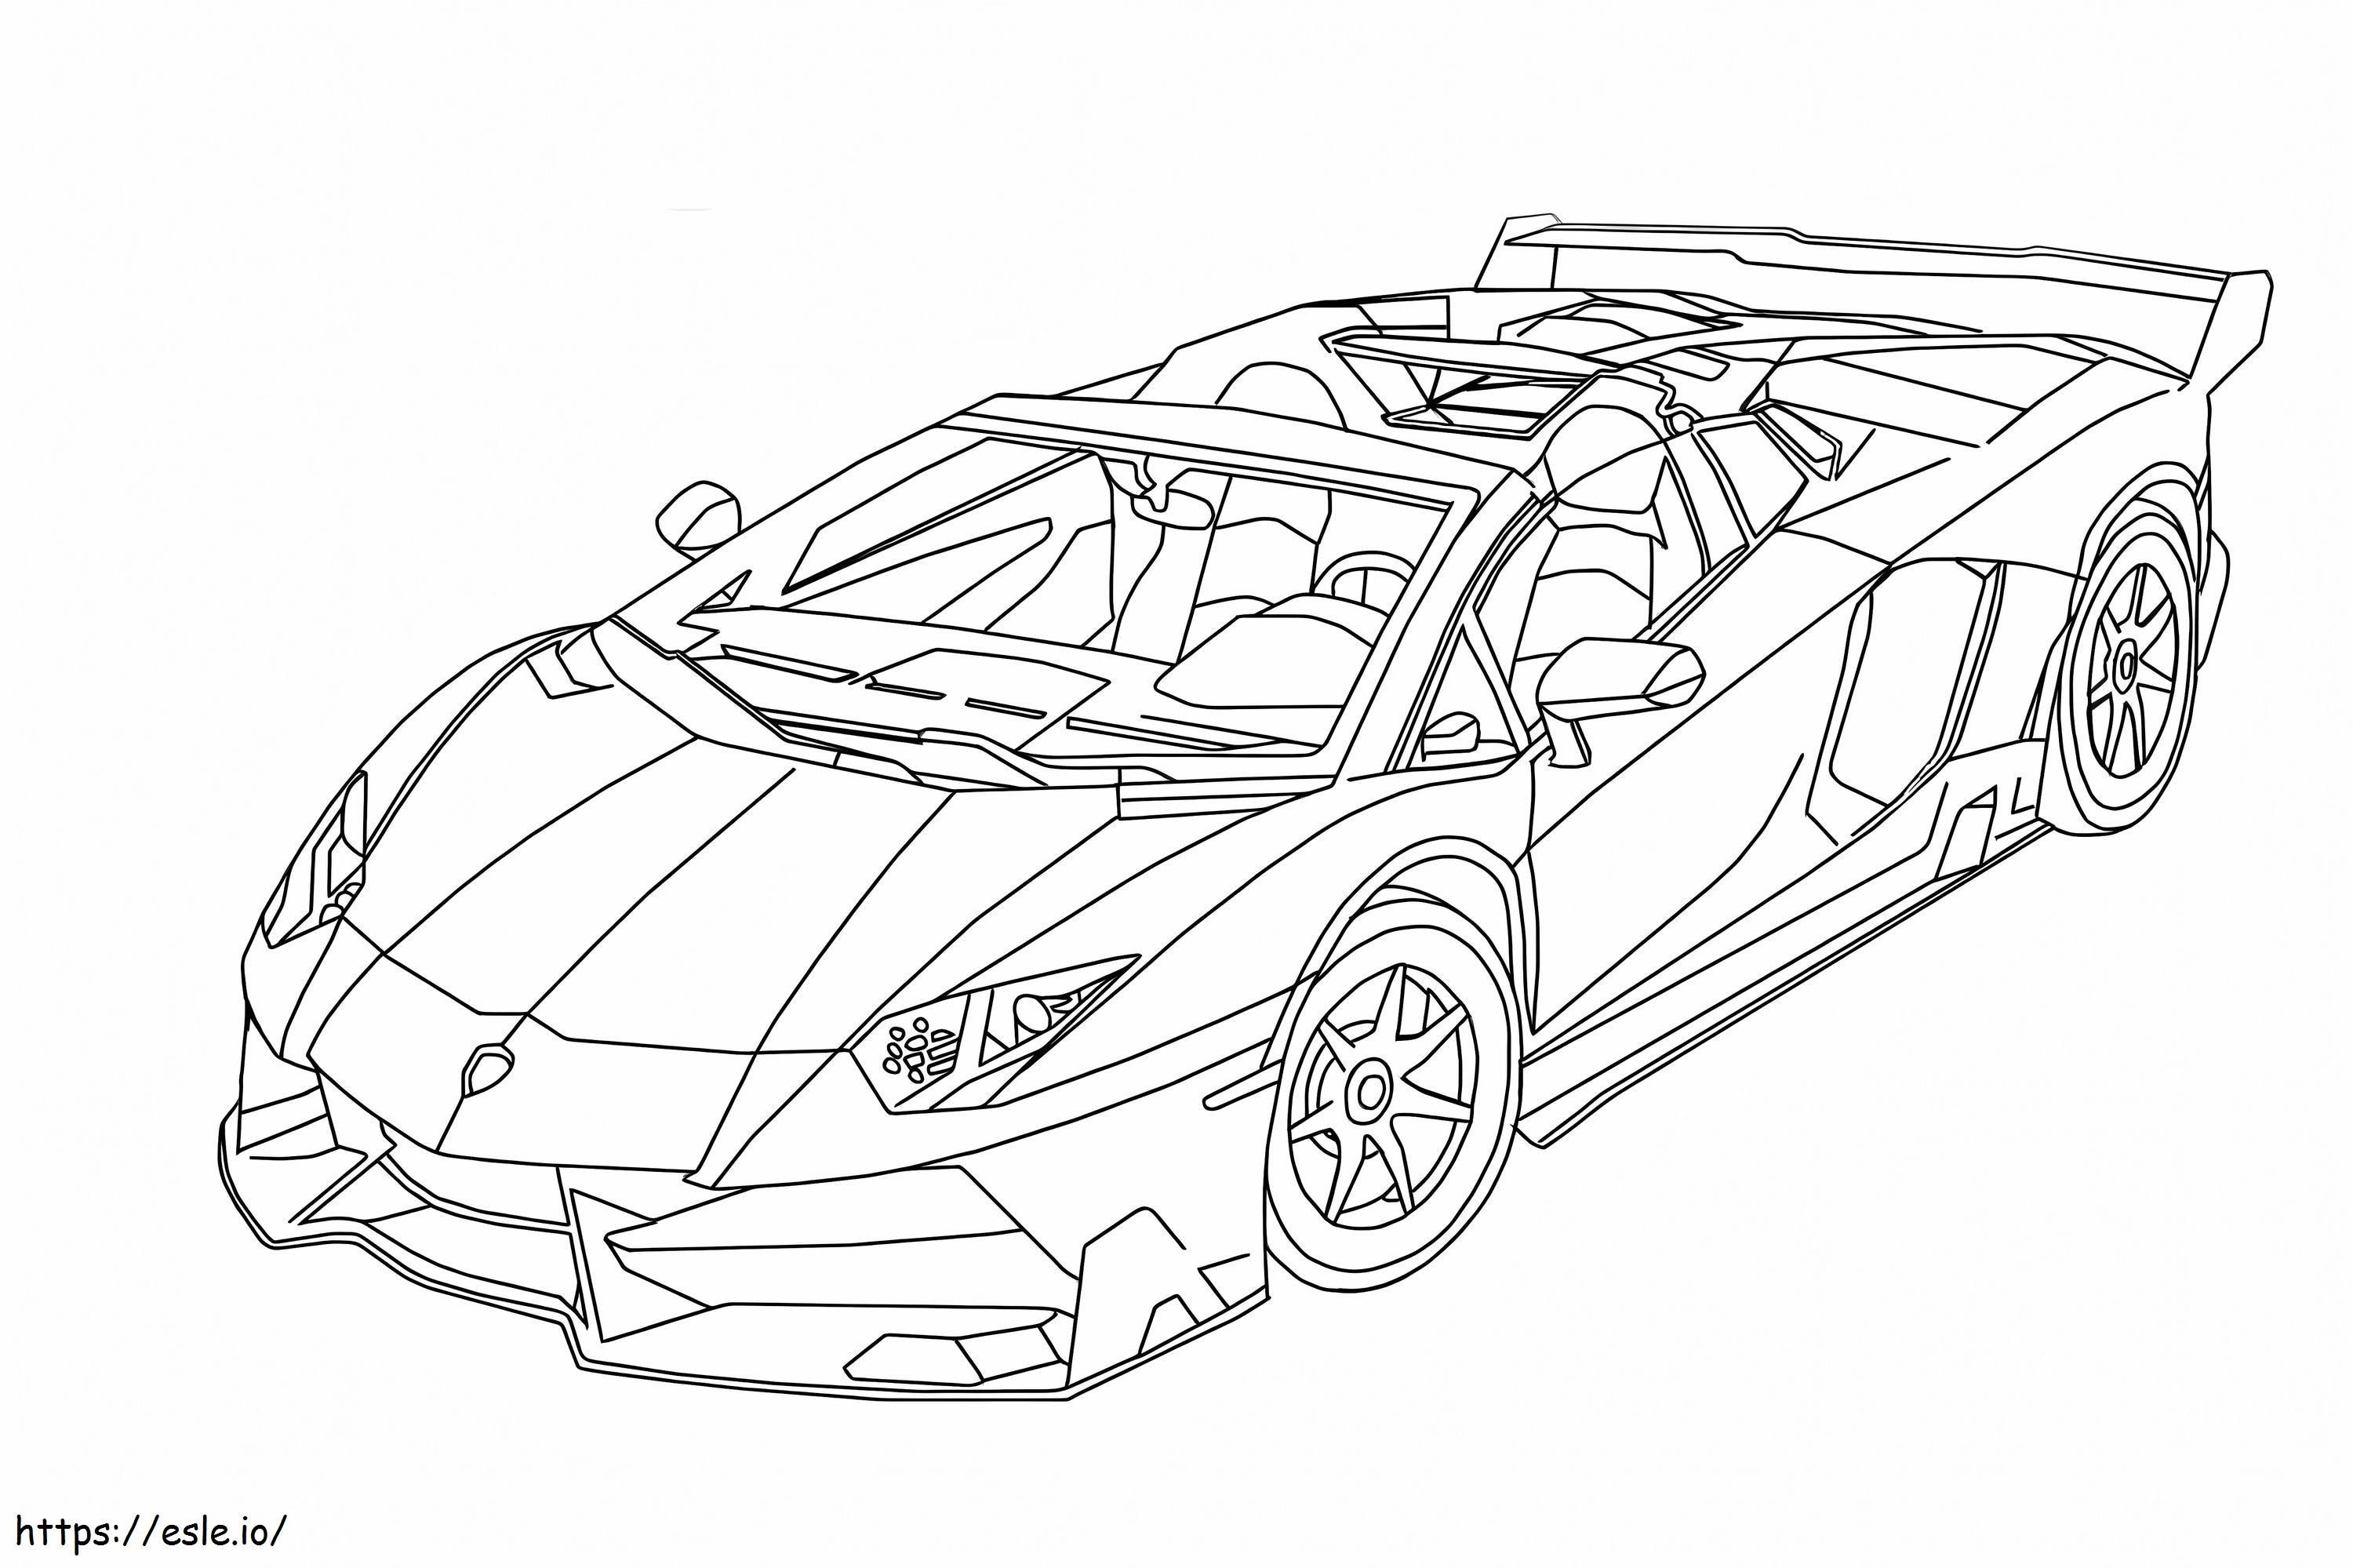 Normal Lamborghini coloring page